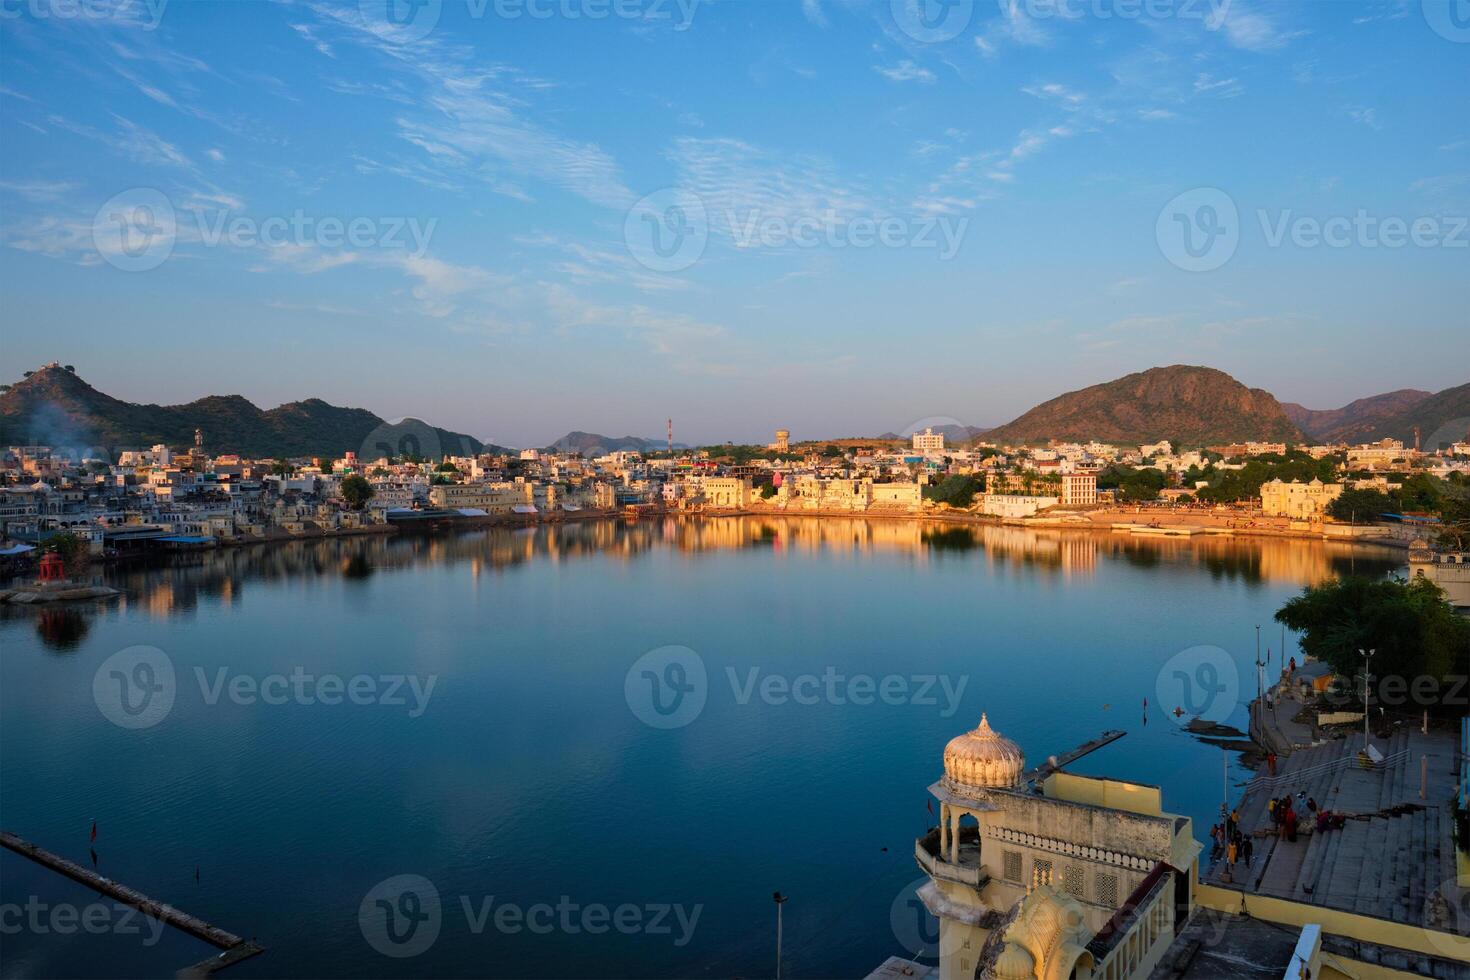 Visualizza di famoso indiano sacro città pushkar con pushkar ghat. Rajasthan, India foto